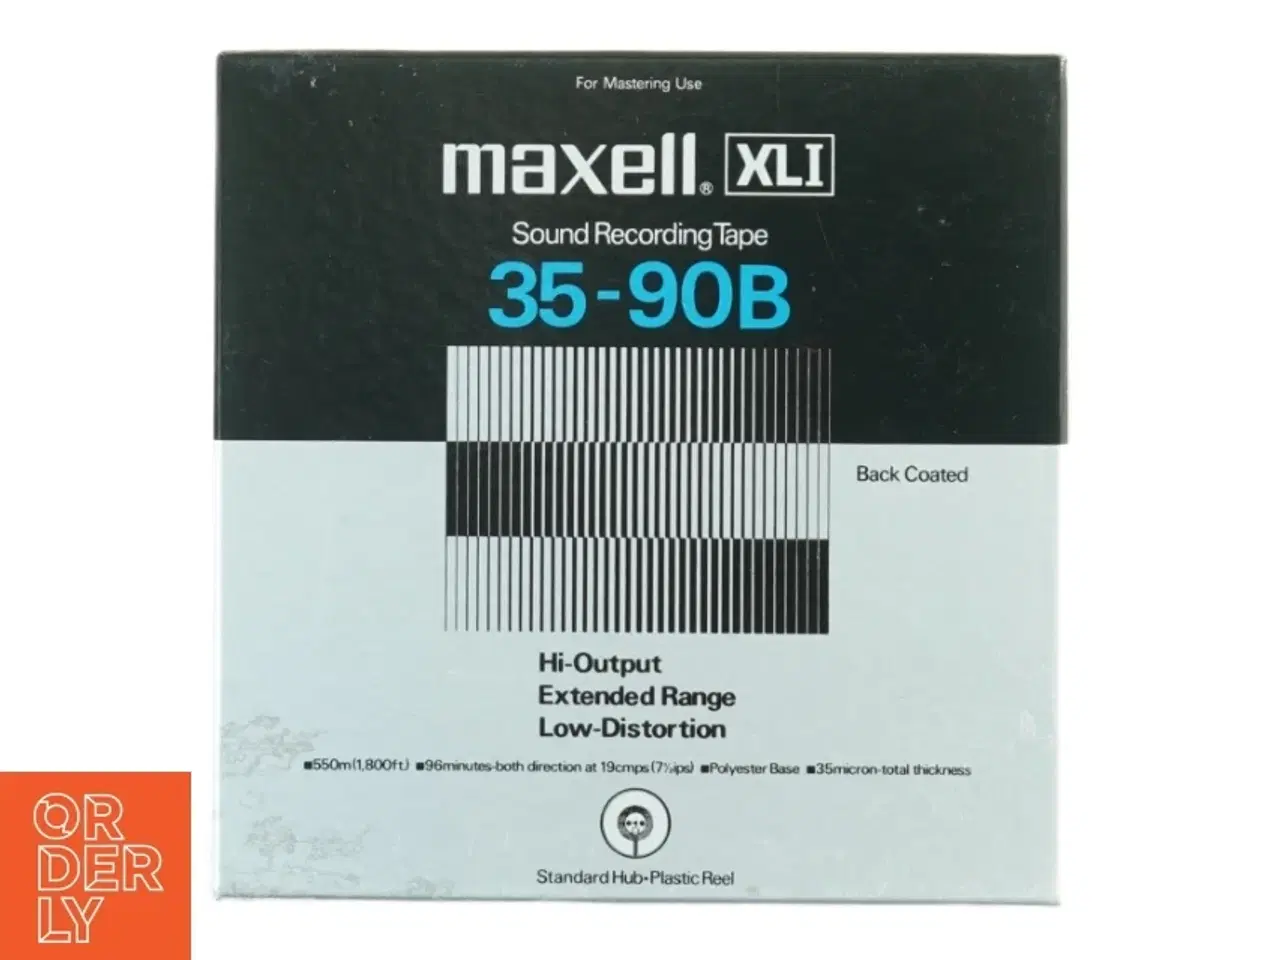 Billede 1 - Maxell XLI 35-90B Audio Spolebånd fra Maxell (str. 18 x 18 cm)